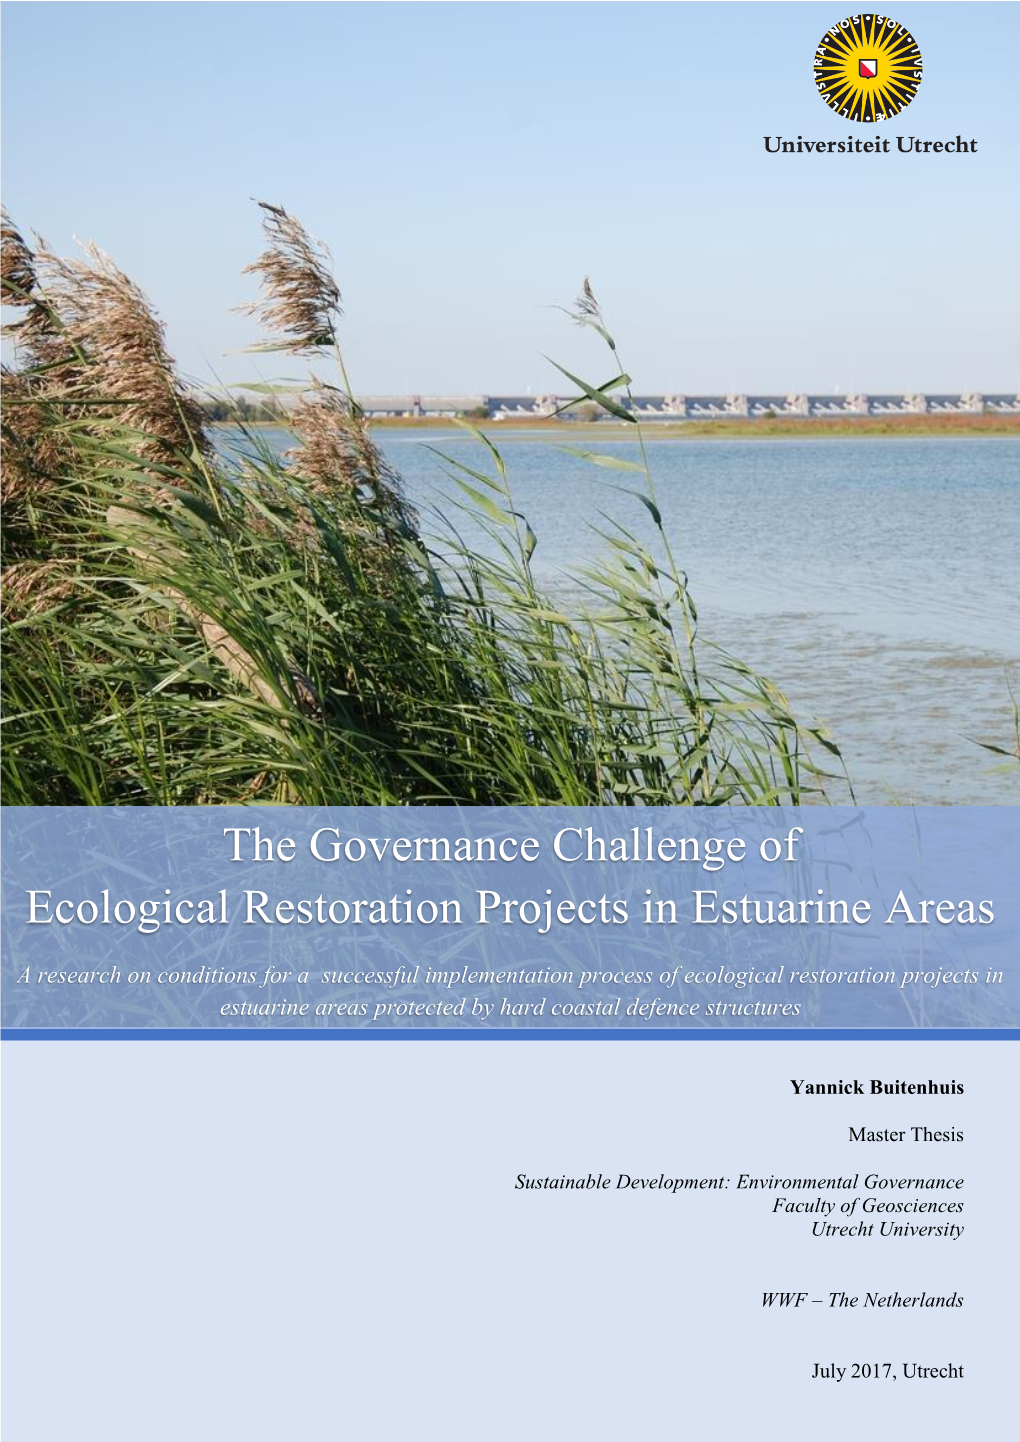 The Governance Challenge of Implementing Ecological Restoration